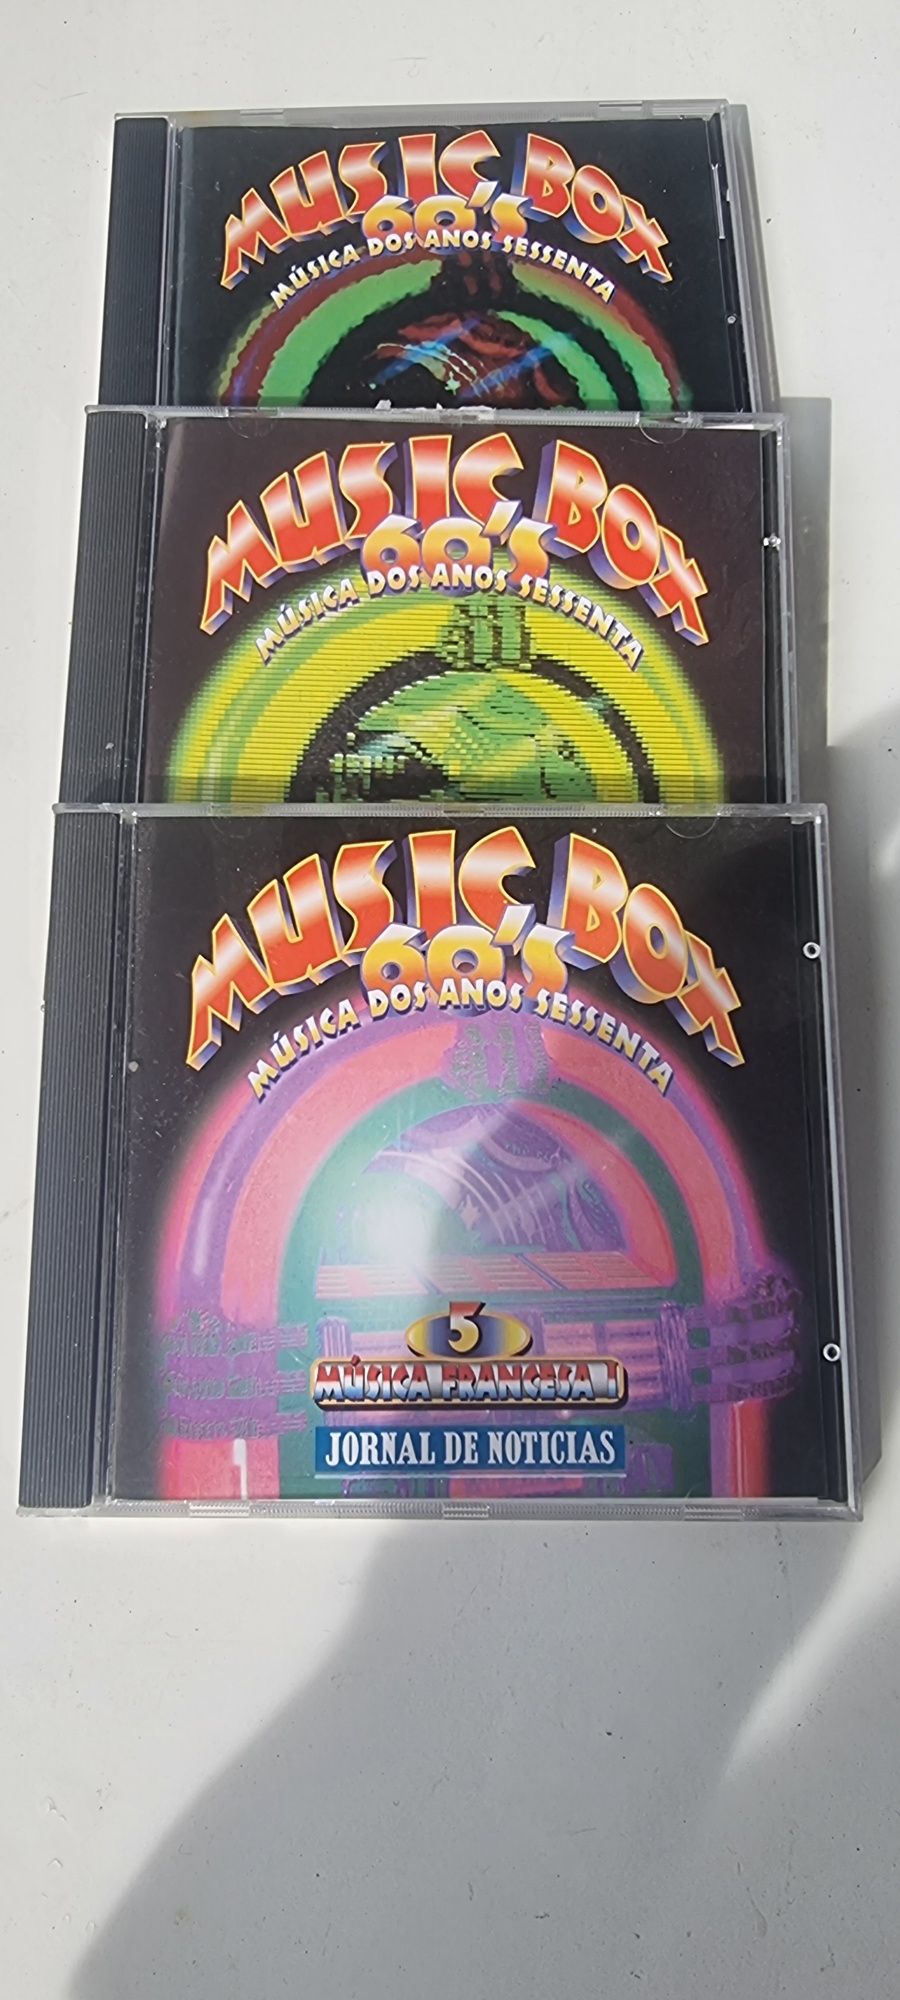 Musica dos Anos 60. CDs Novos e selados